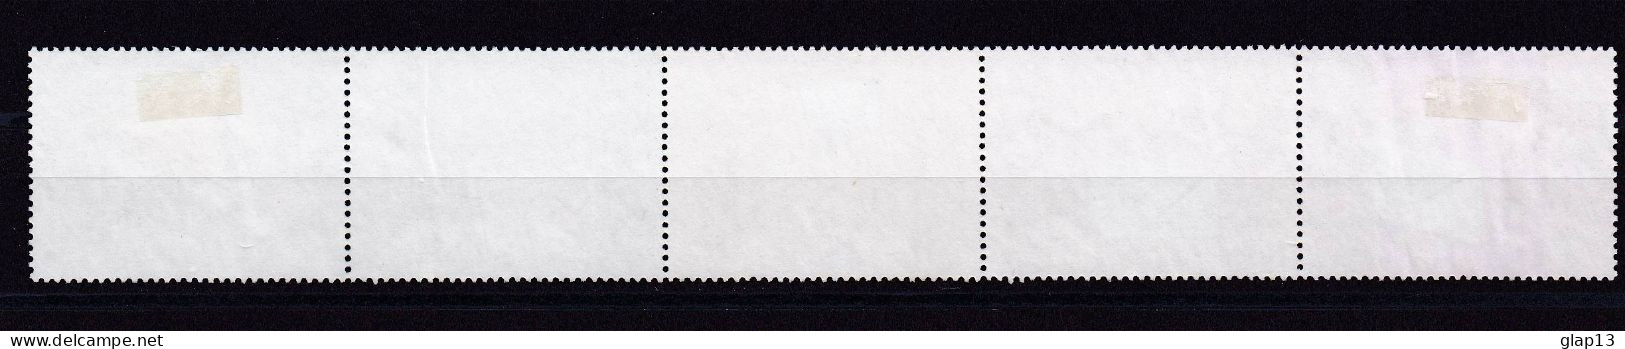 GRANDE-BRETAGNE 2004 TIMBRE N°2518/22 OBLITERE EVENEMENTS - Used Stamps